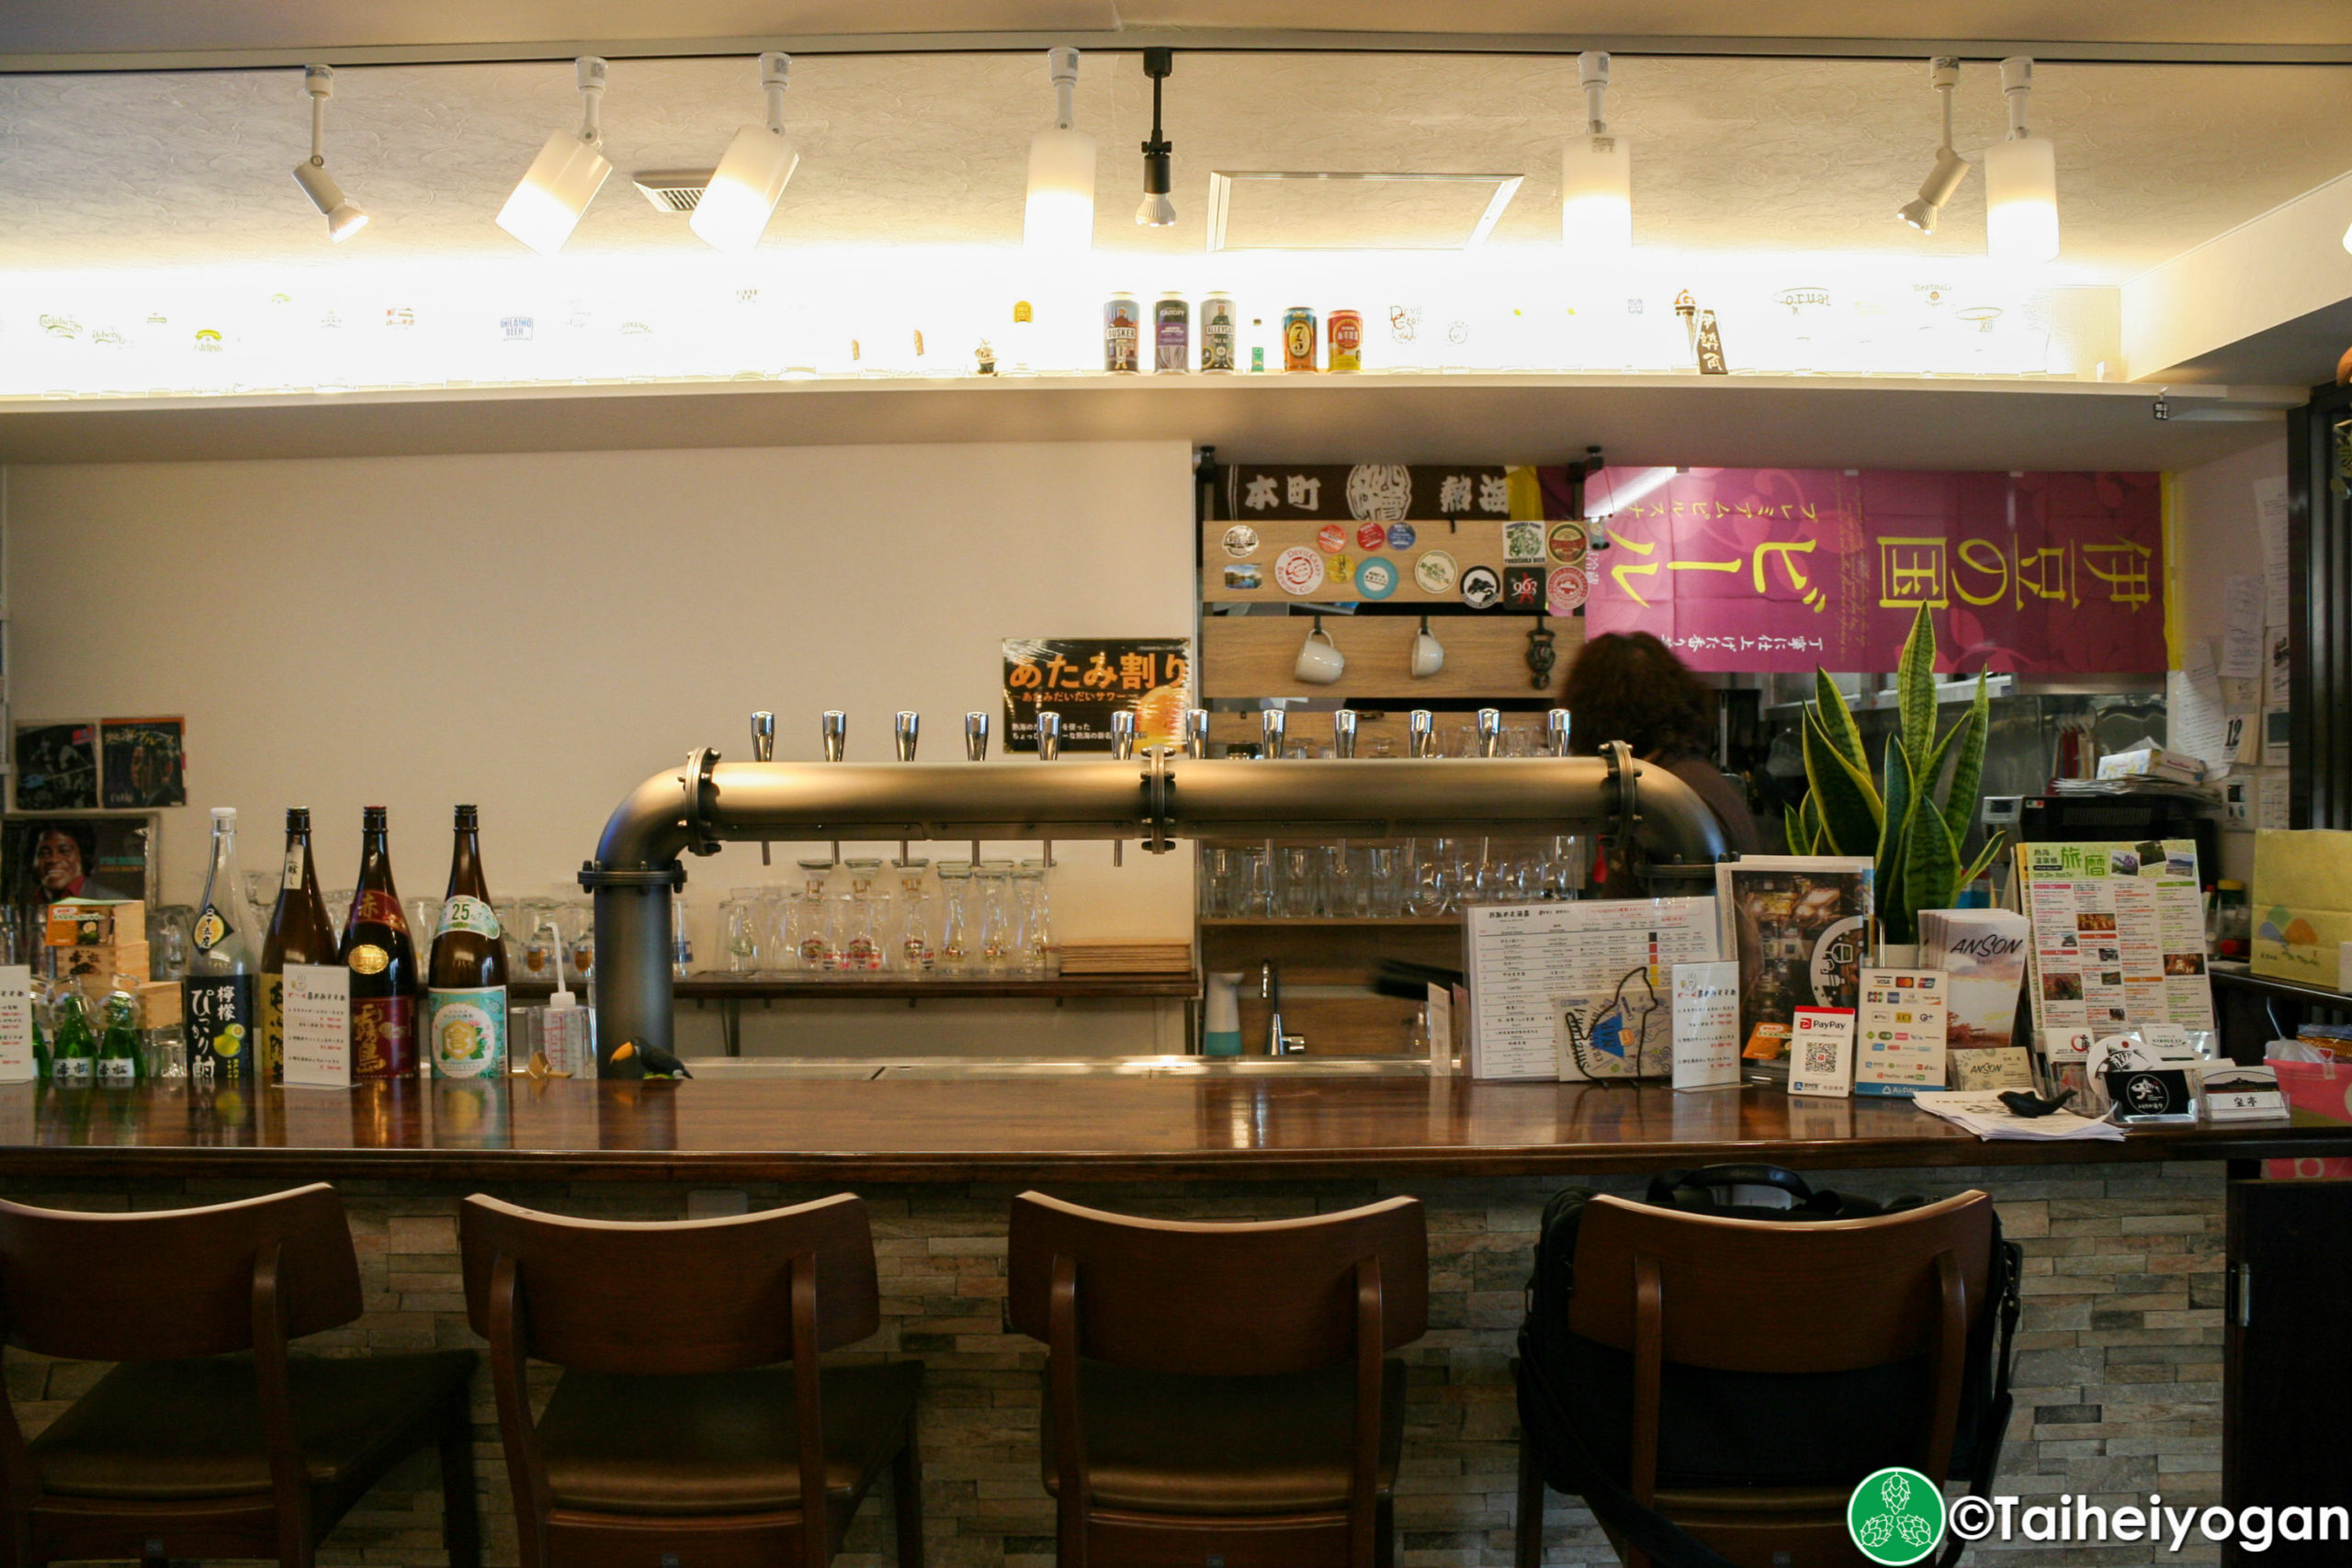 Craft Beer Café 熱海の麥酒屋・Craft Beer Café Atami Mugishuya - Interior - Craft Beer Taps